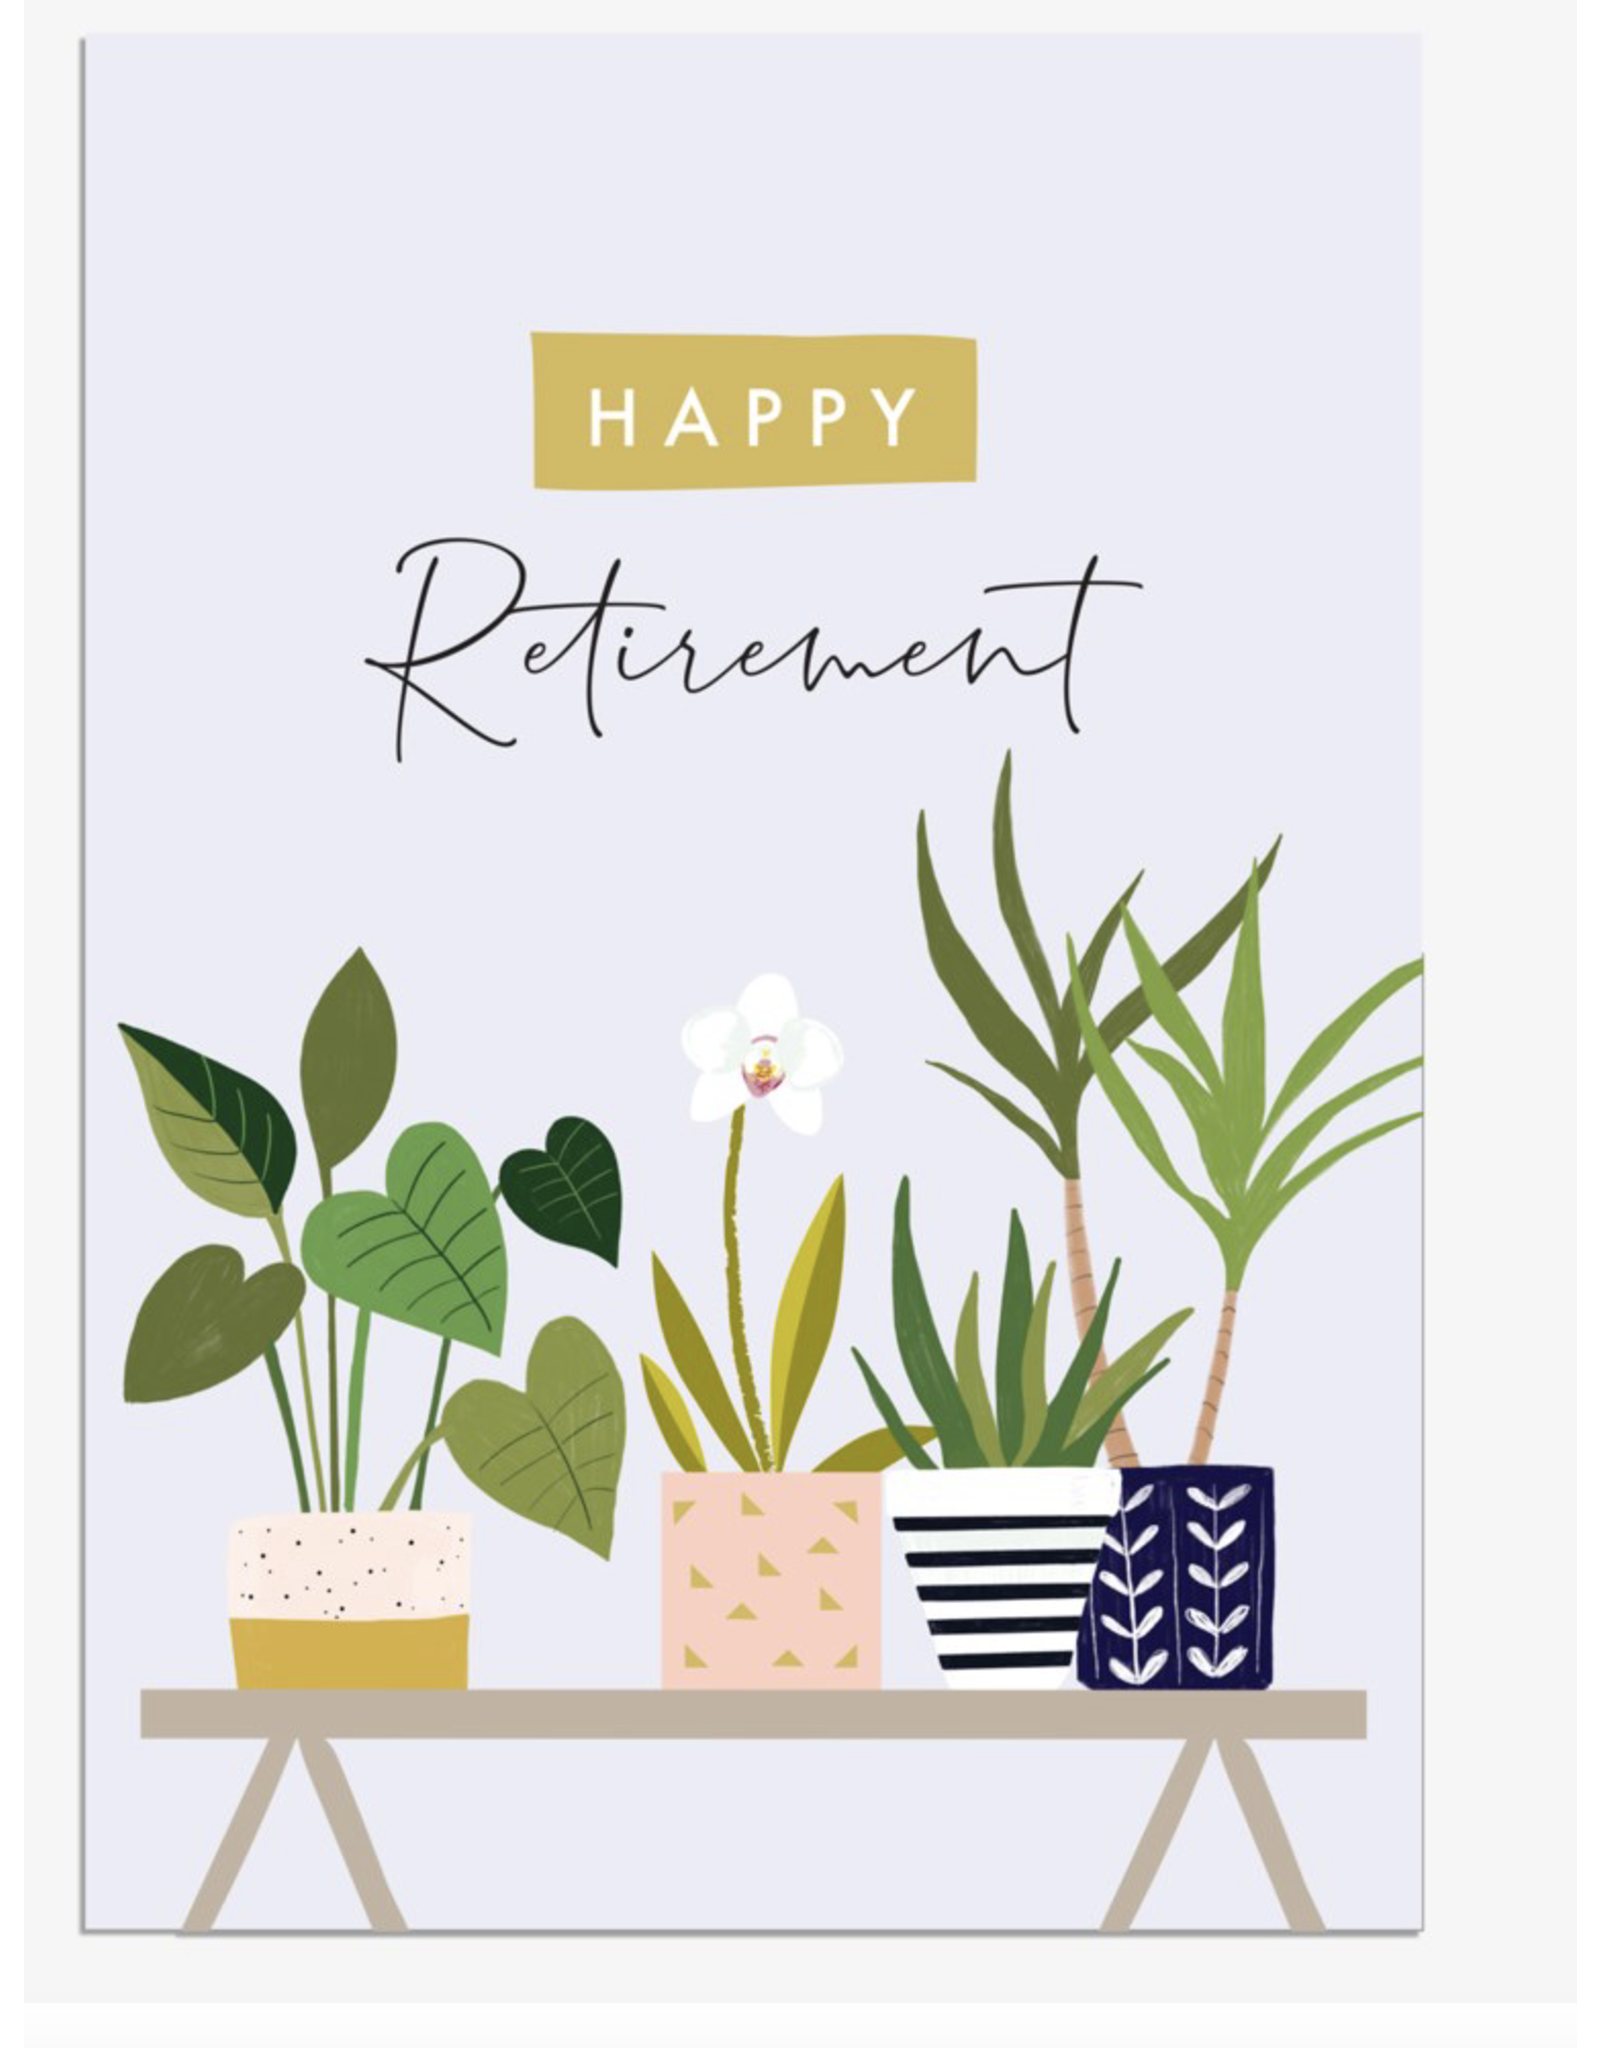 Retirement - Happy Retirement Plants